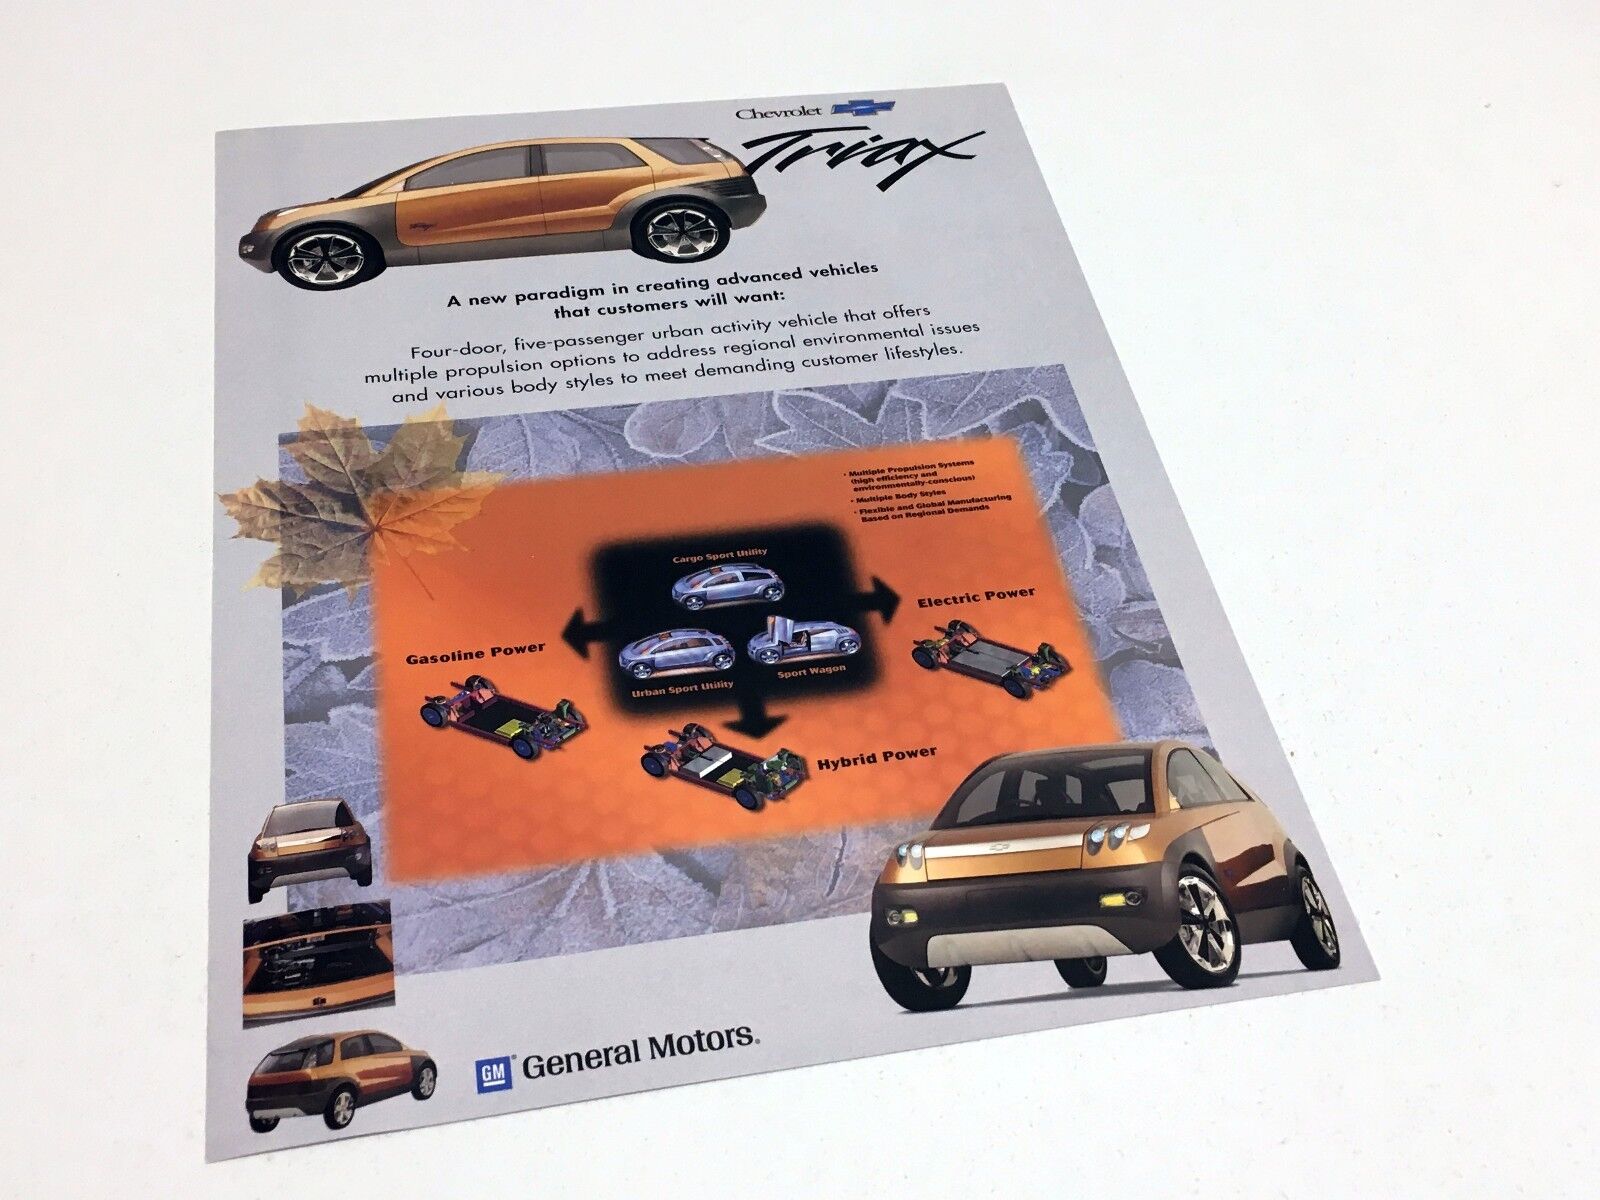 2000 Chevrolet TrIax Concept Vehicle Information Sheet Brochure